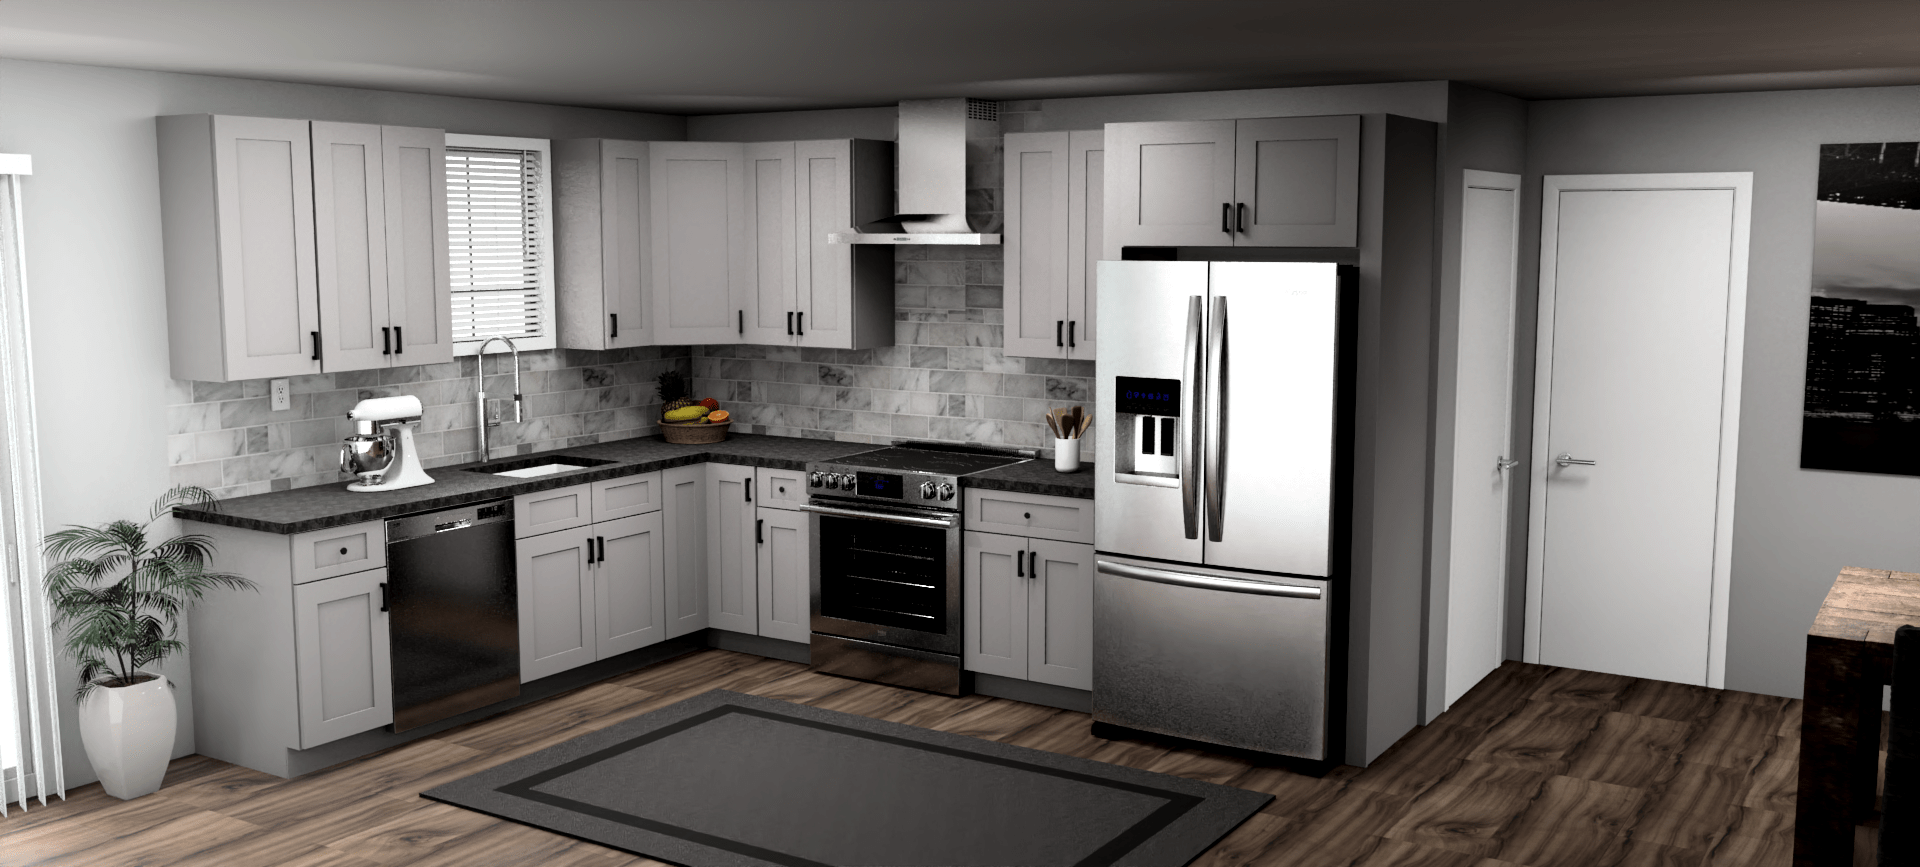 Fabuwood Allure Galaxy Nickel 9 x 12 L Shaped Kitchen Main Layout Photo